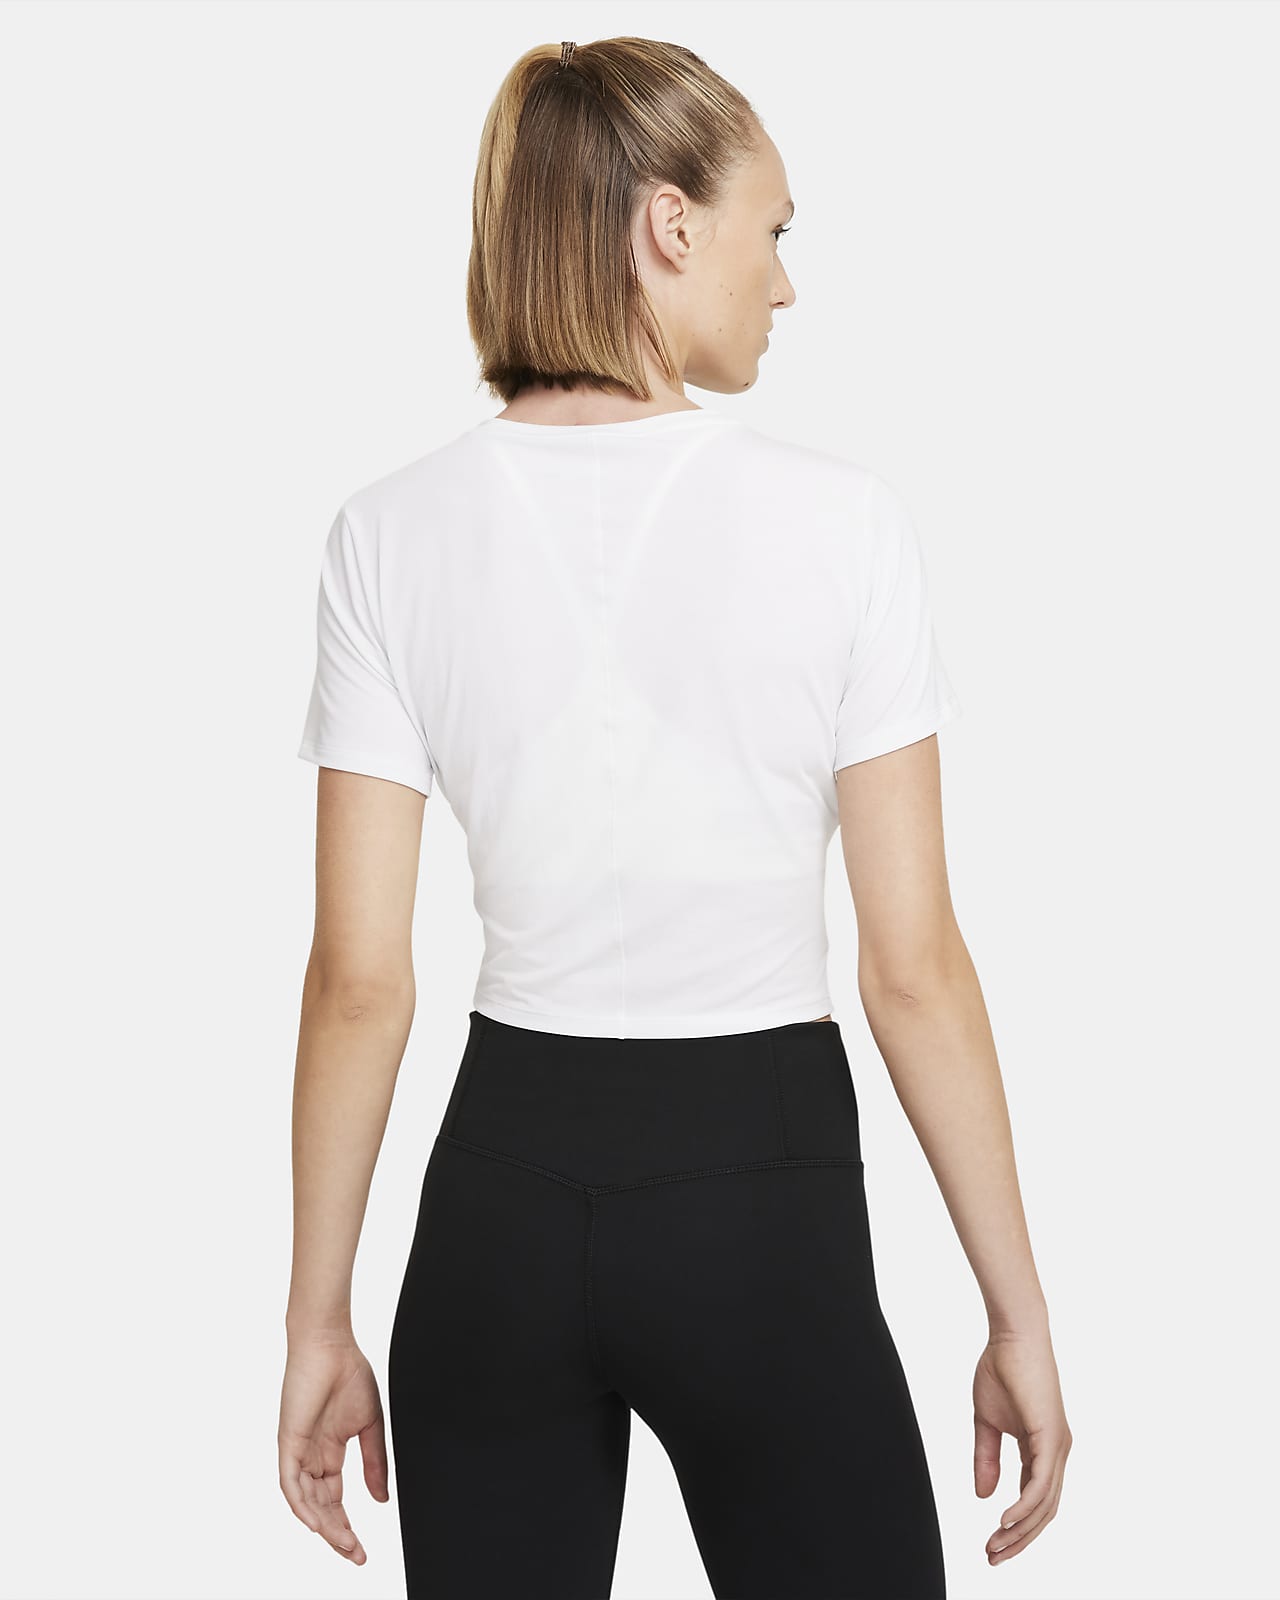 Nike Dri-fit Yoga Layer Womens Short-Sleeve Training Top Cj9326-010 :  : Clothing, Shoes & Accessories